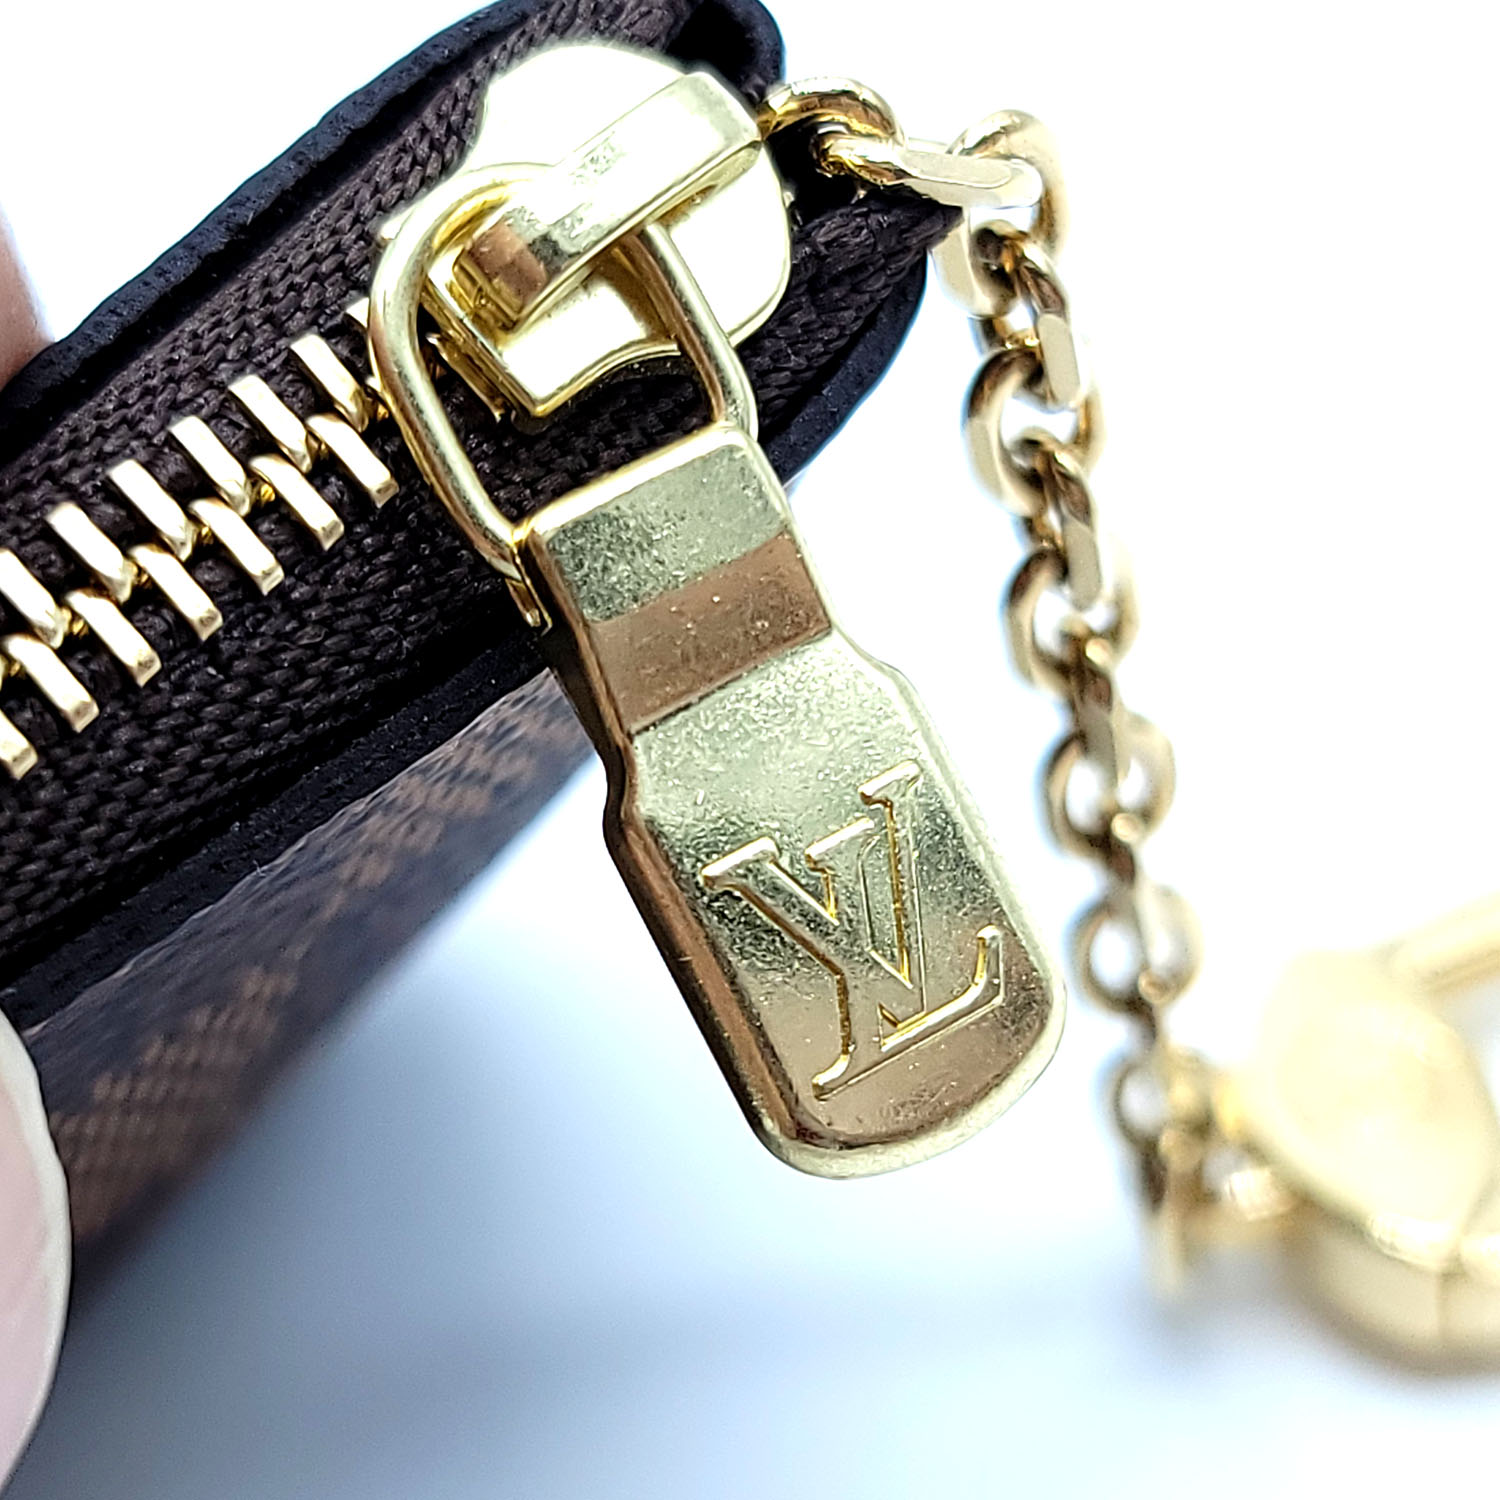 Louis Vuitton Key Pouch Damier Ebene - $100 (60% Off Retail) - From Kira